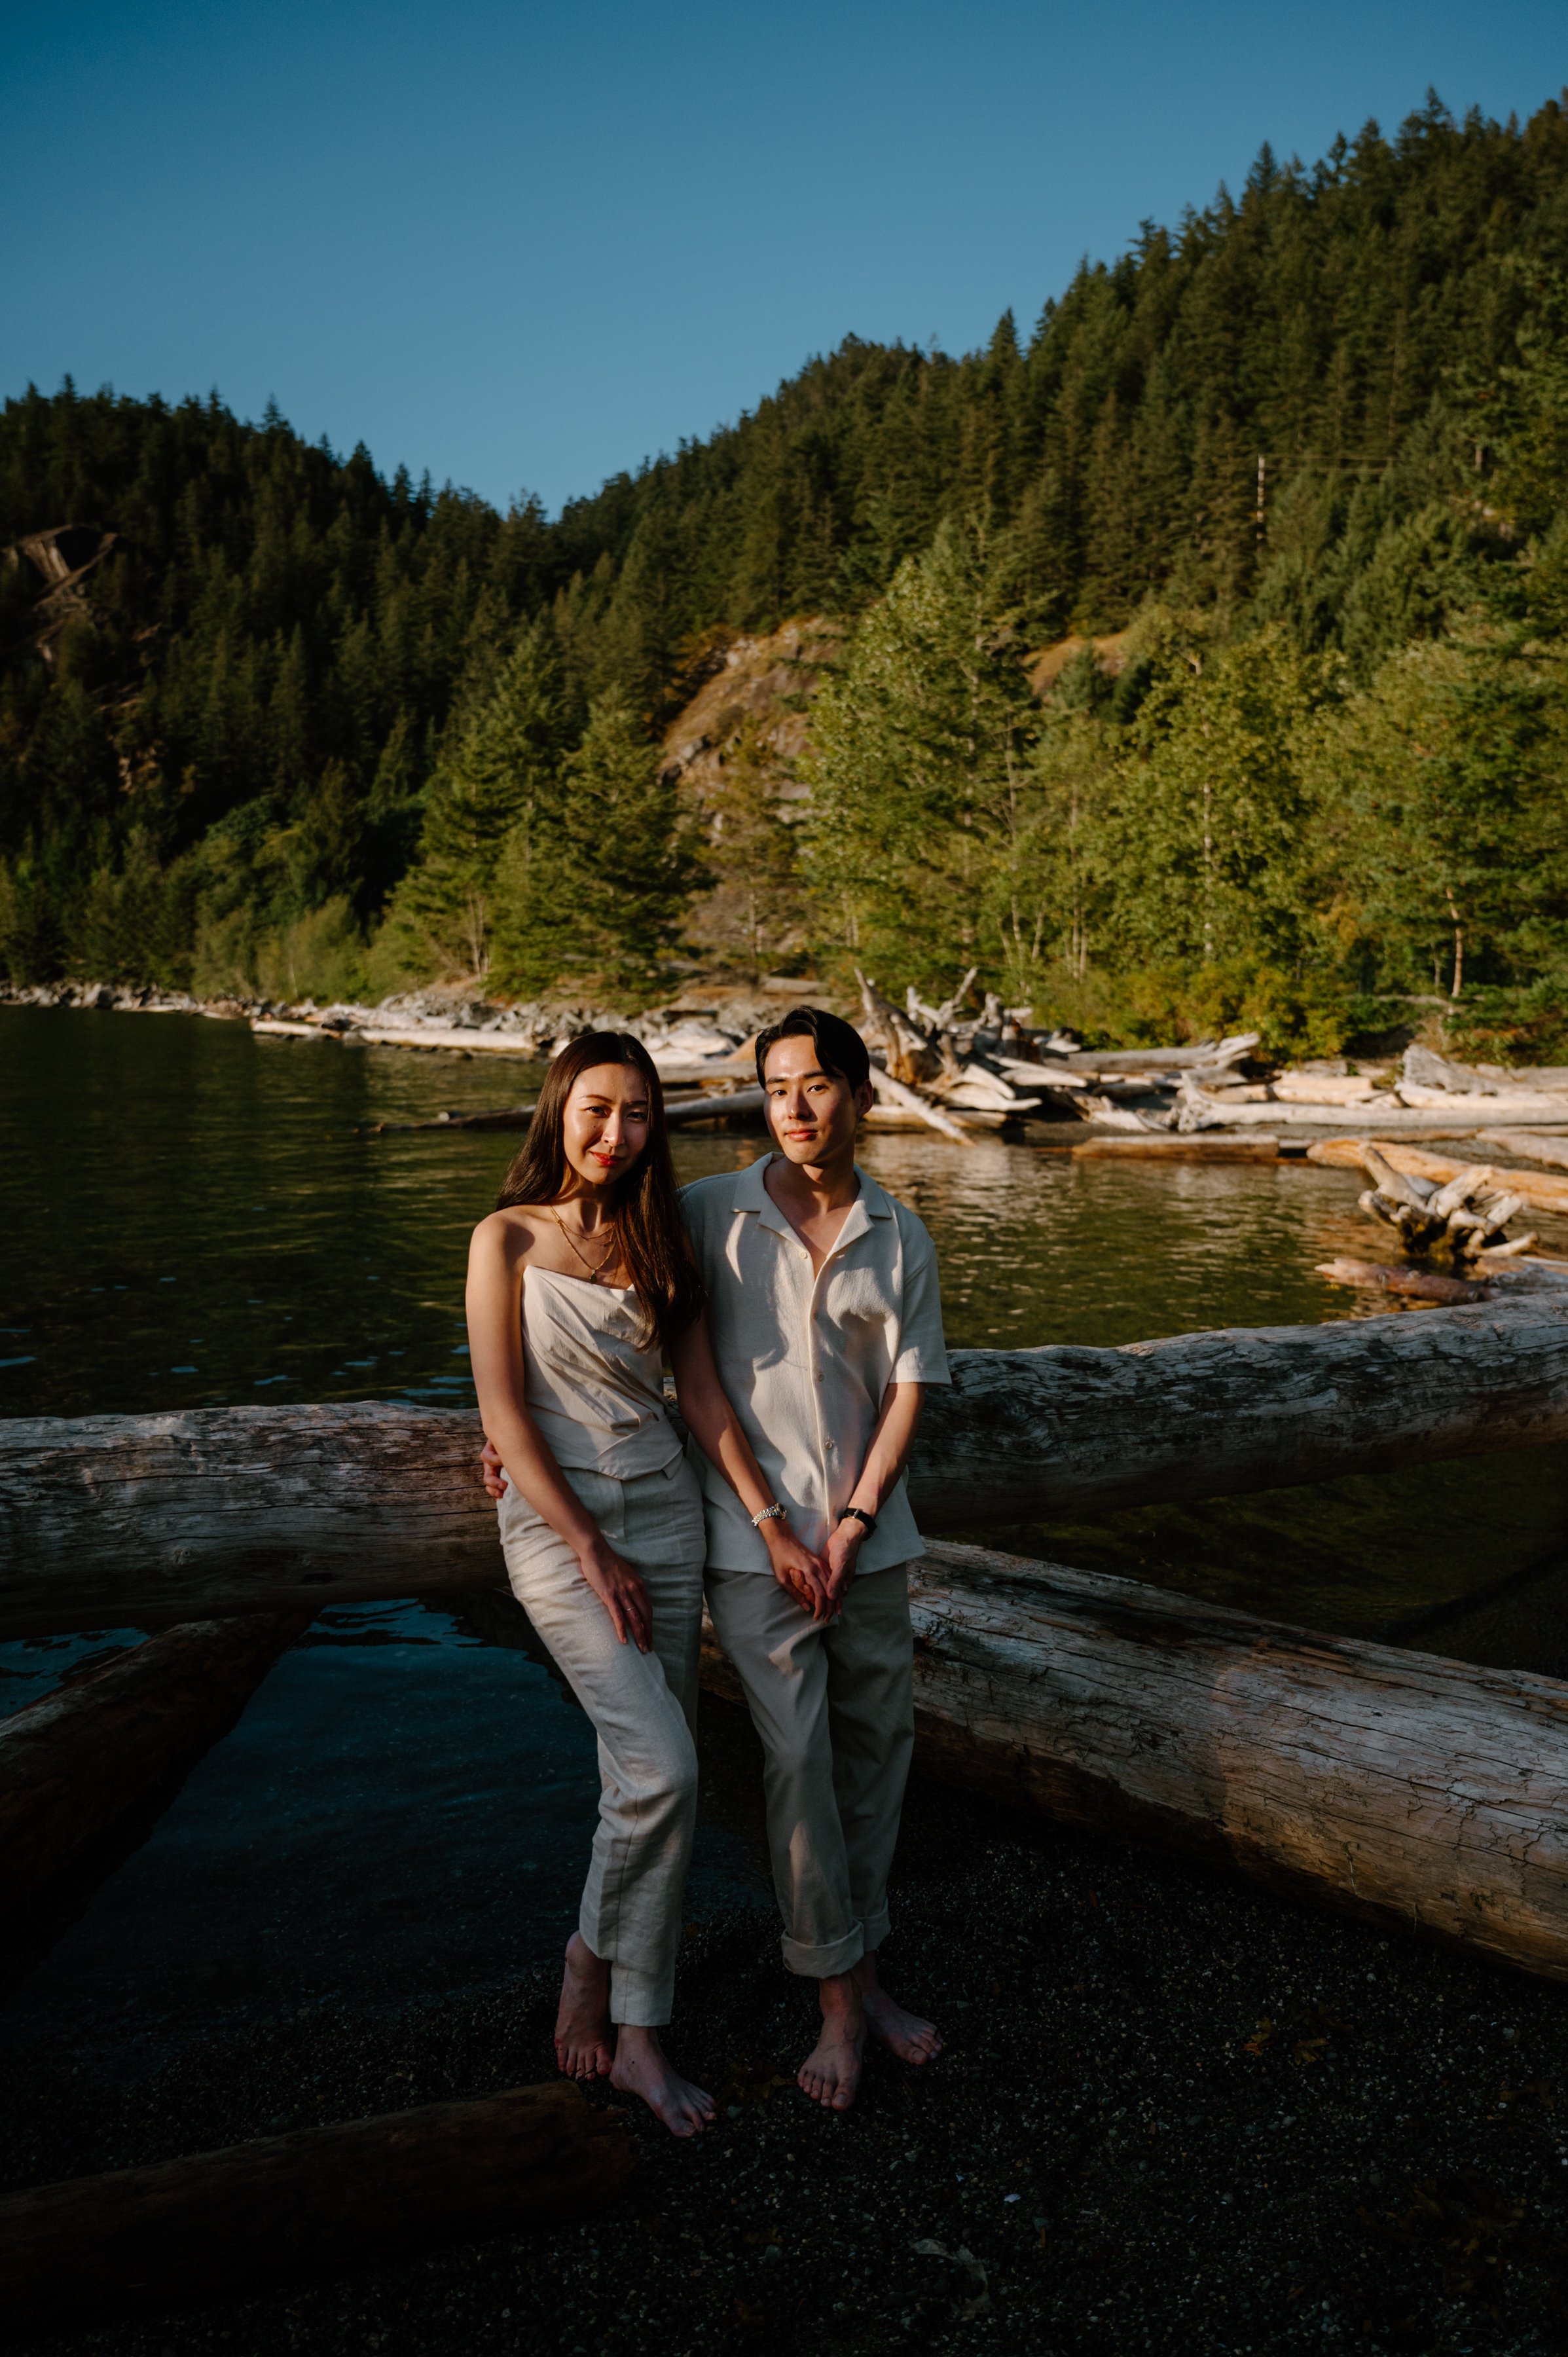 RosewoodStudios-PorteauCove-BCEngagement-BCWeddingPhotographer-Vancouver-Wedding-Photographer-Proposal-1.jpg